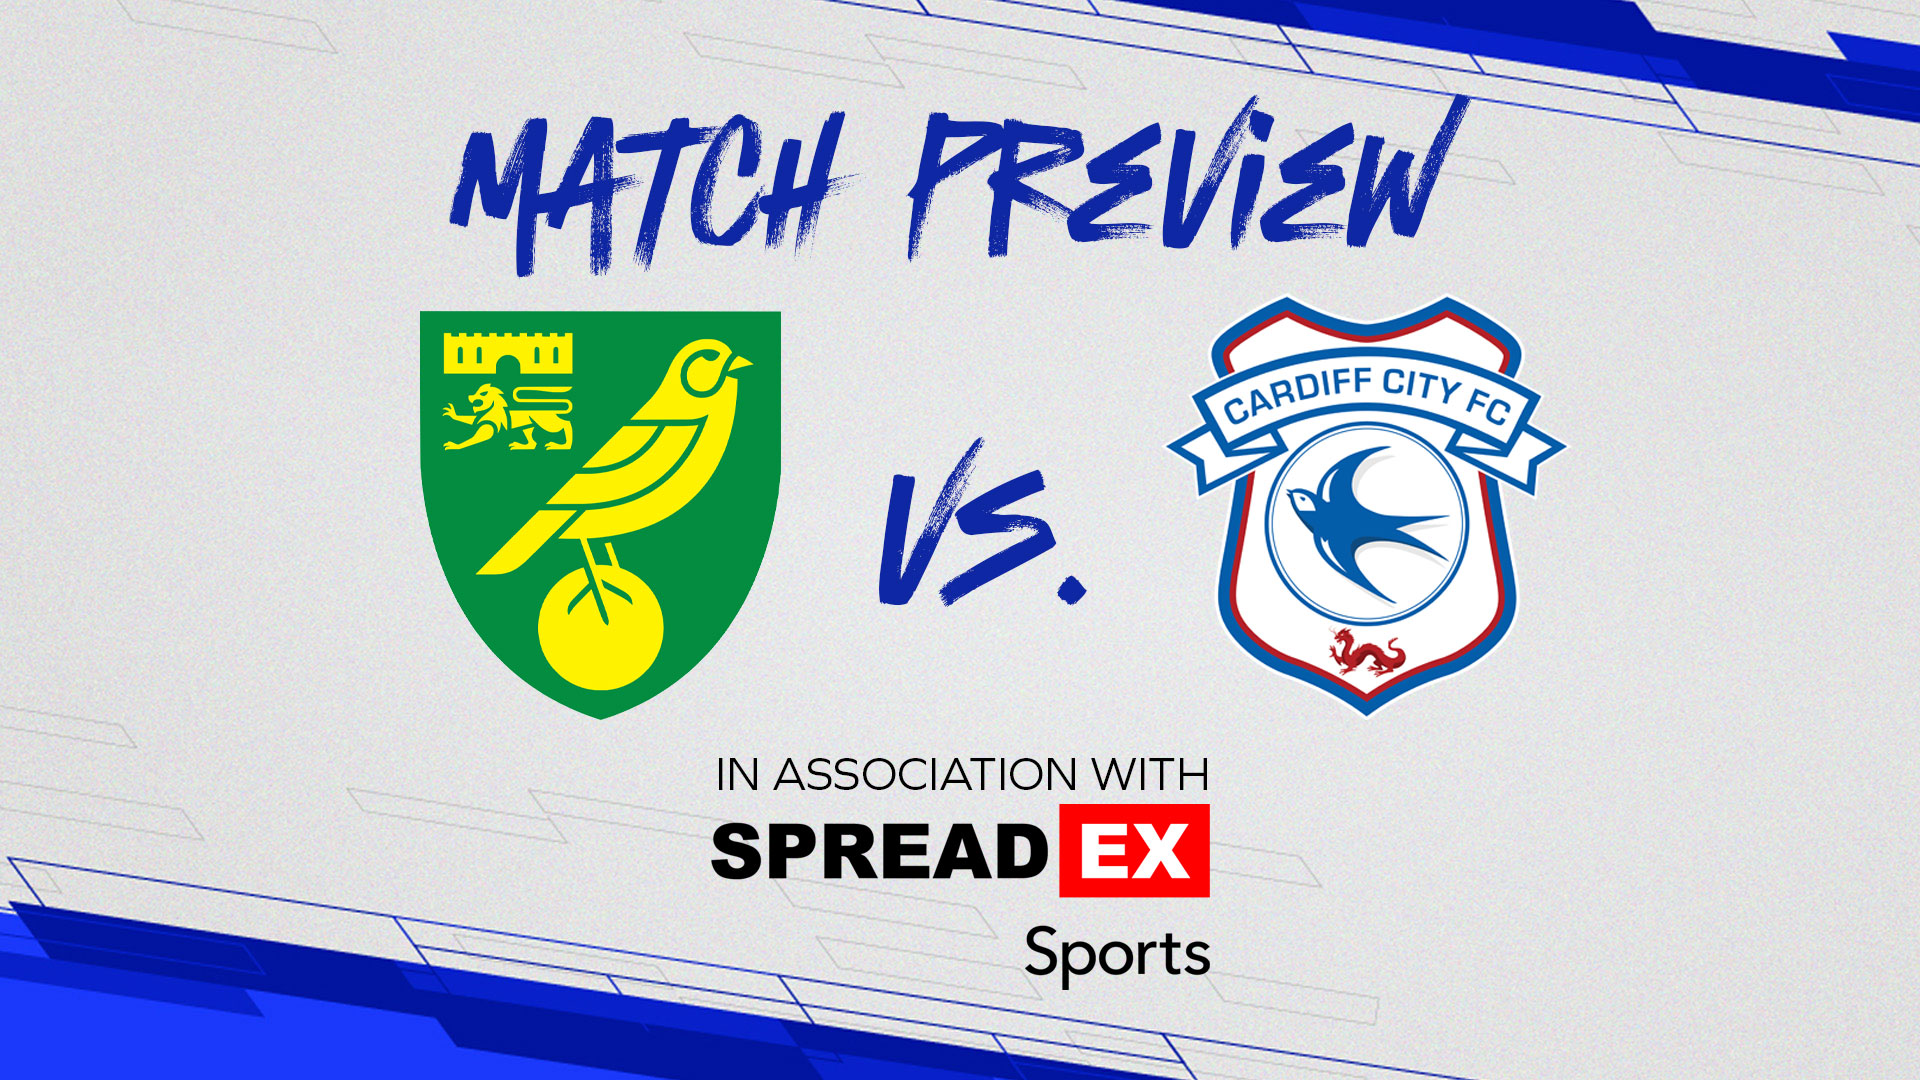 Match Preview: Norwich City vs. Cardiff City